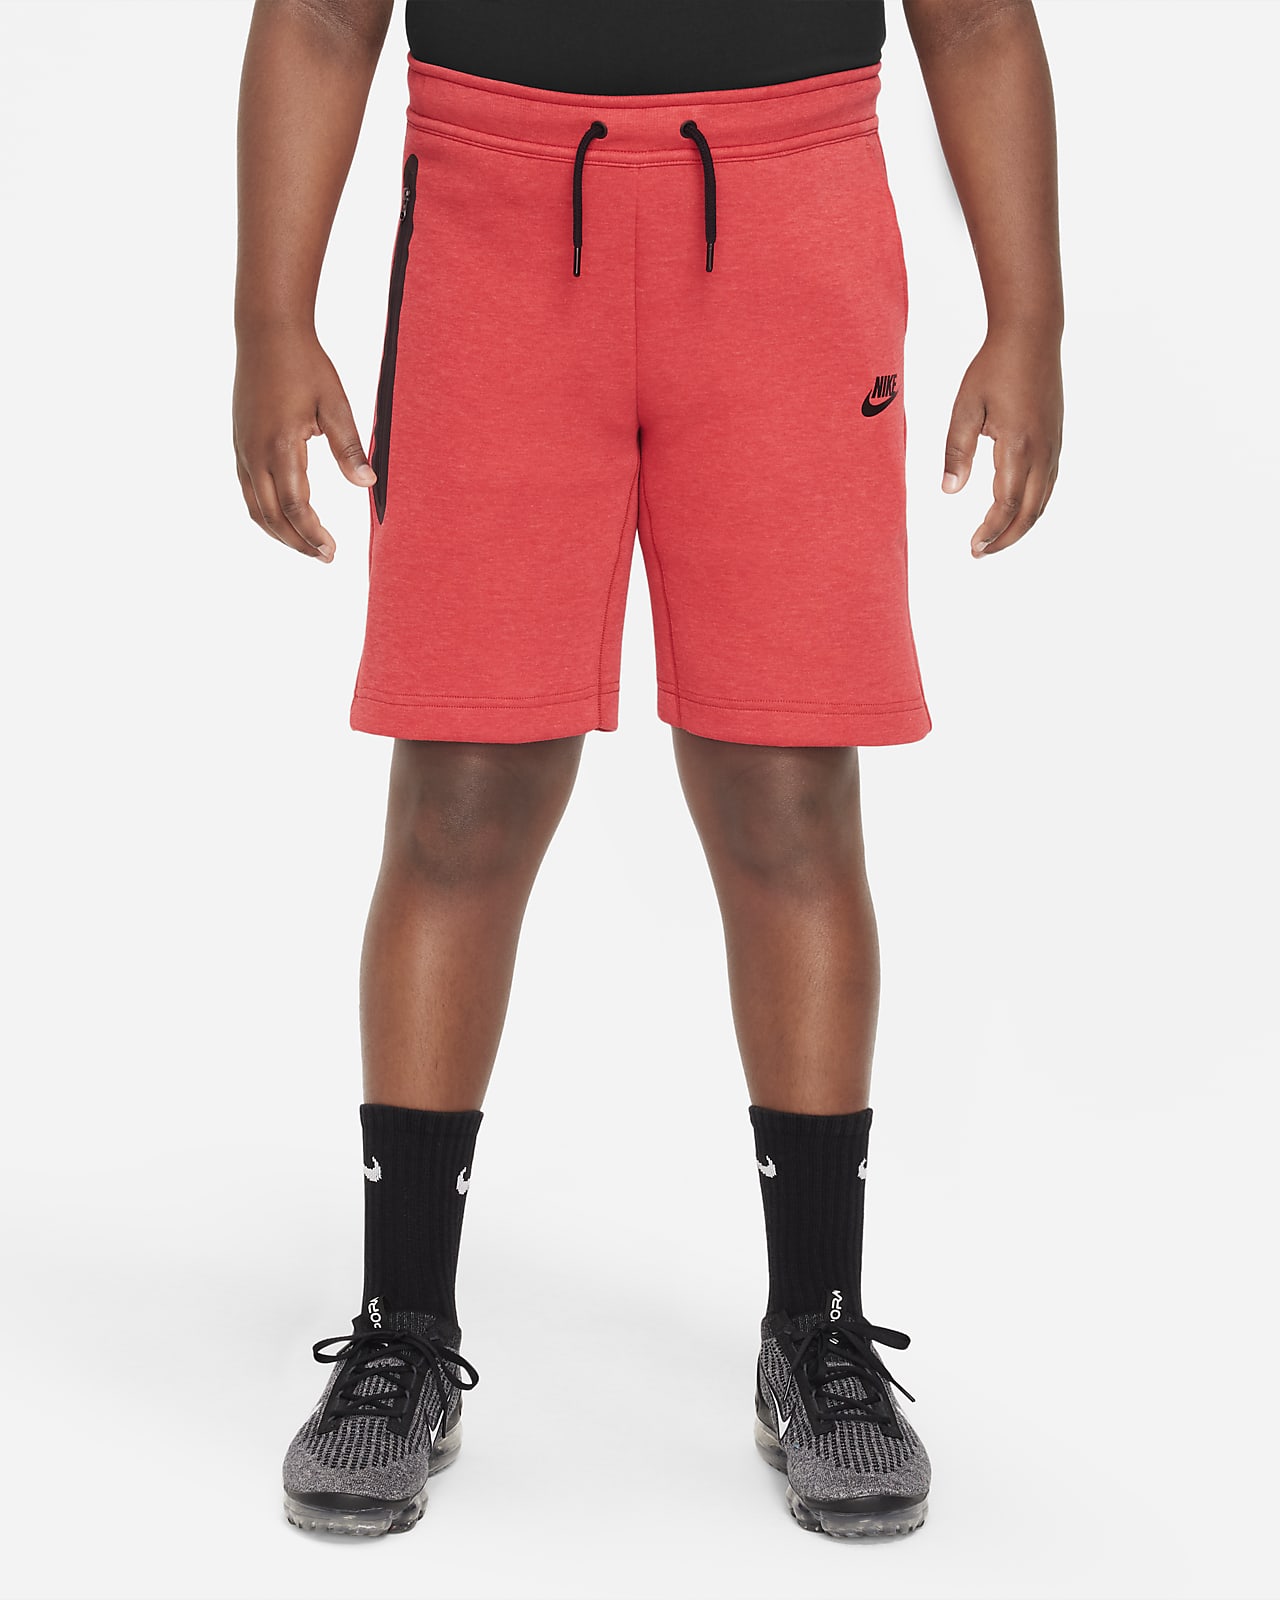 Shorts para grande Nike (talla amplia). Nike.com